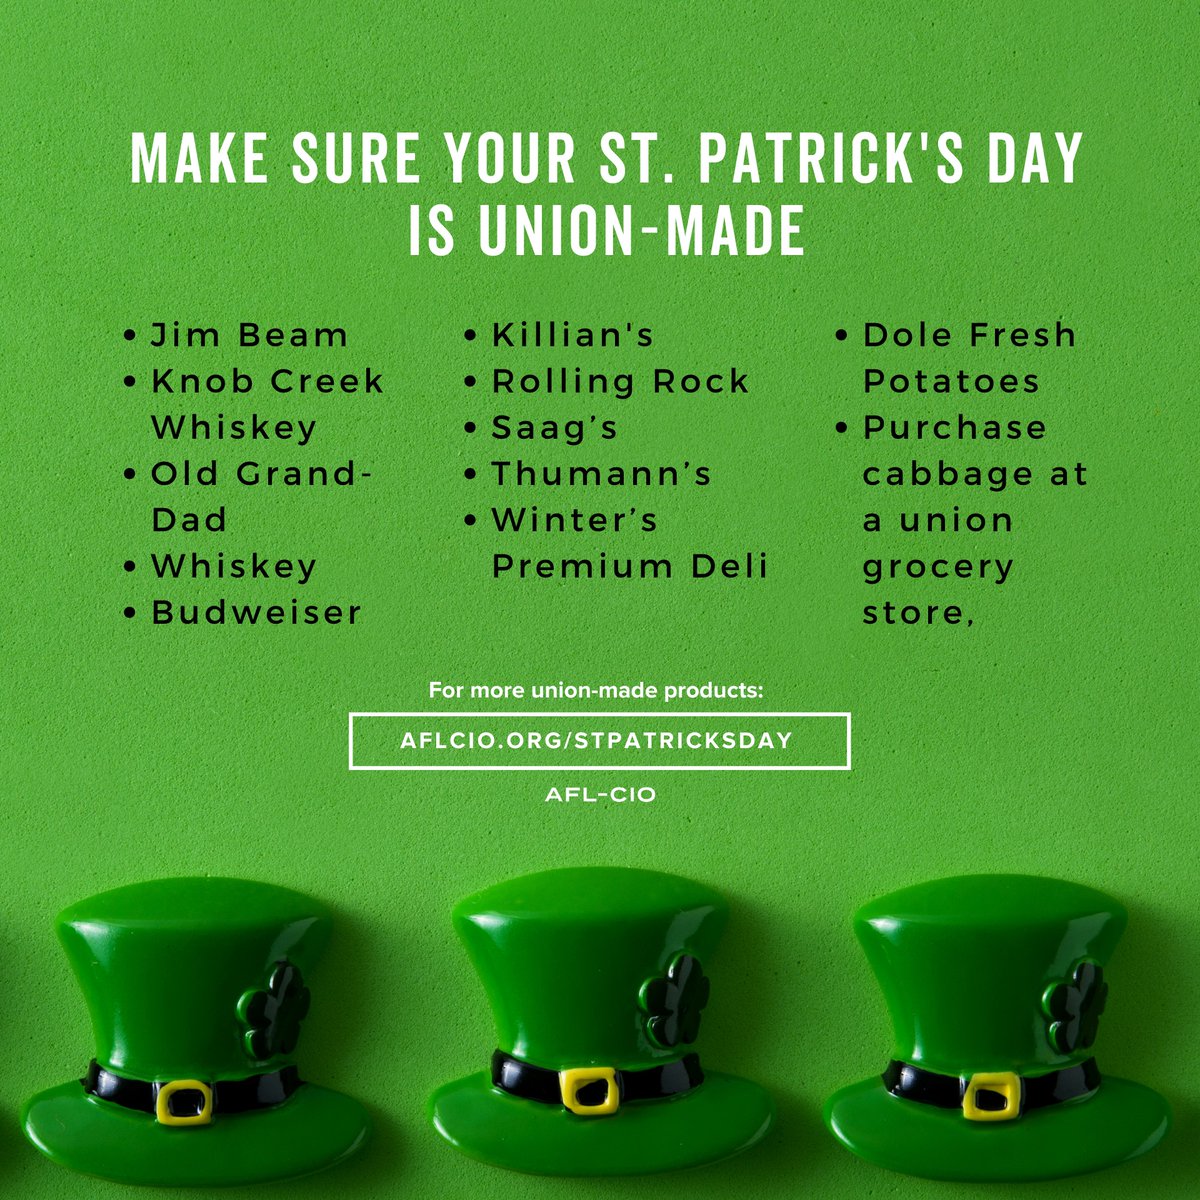 Make it a #UnionMade #StPatricksDay! #1u #BuyUnion